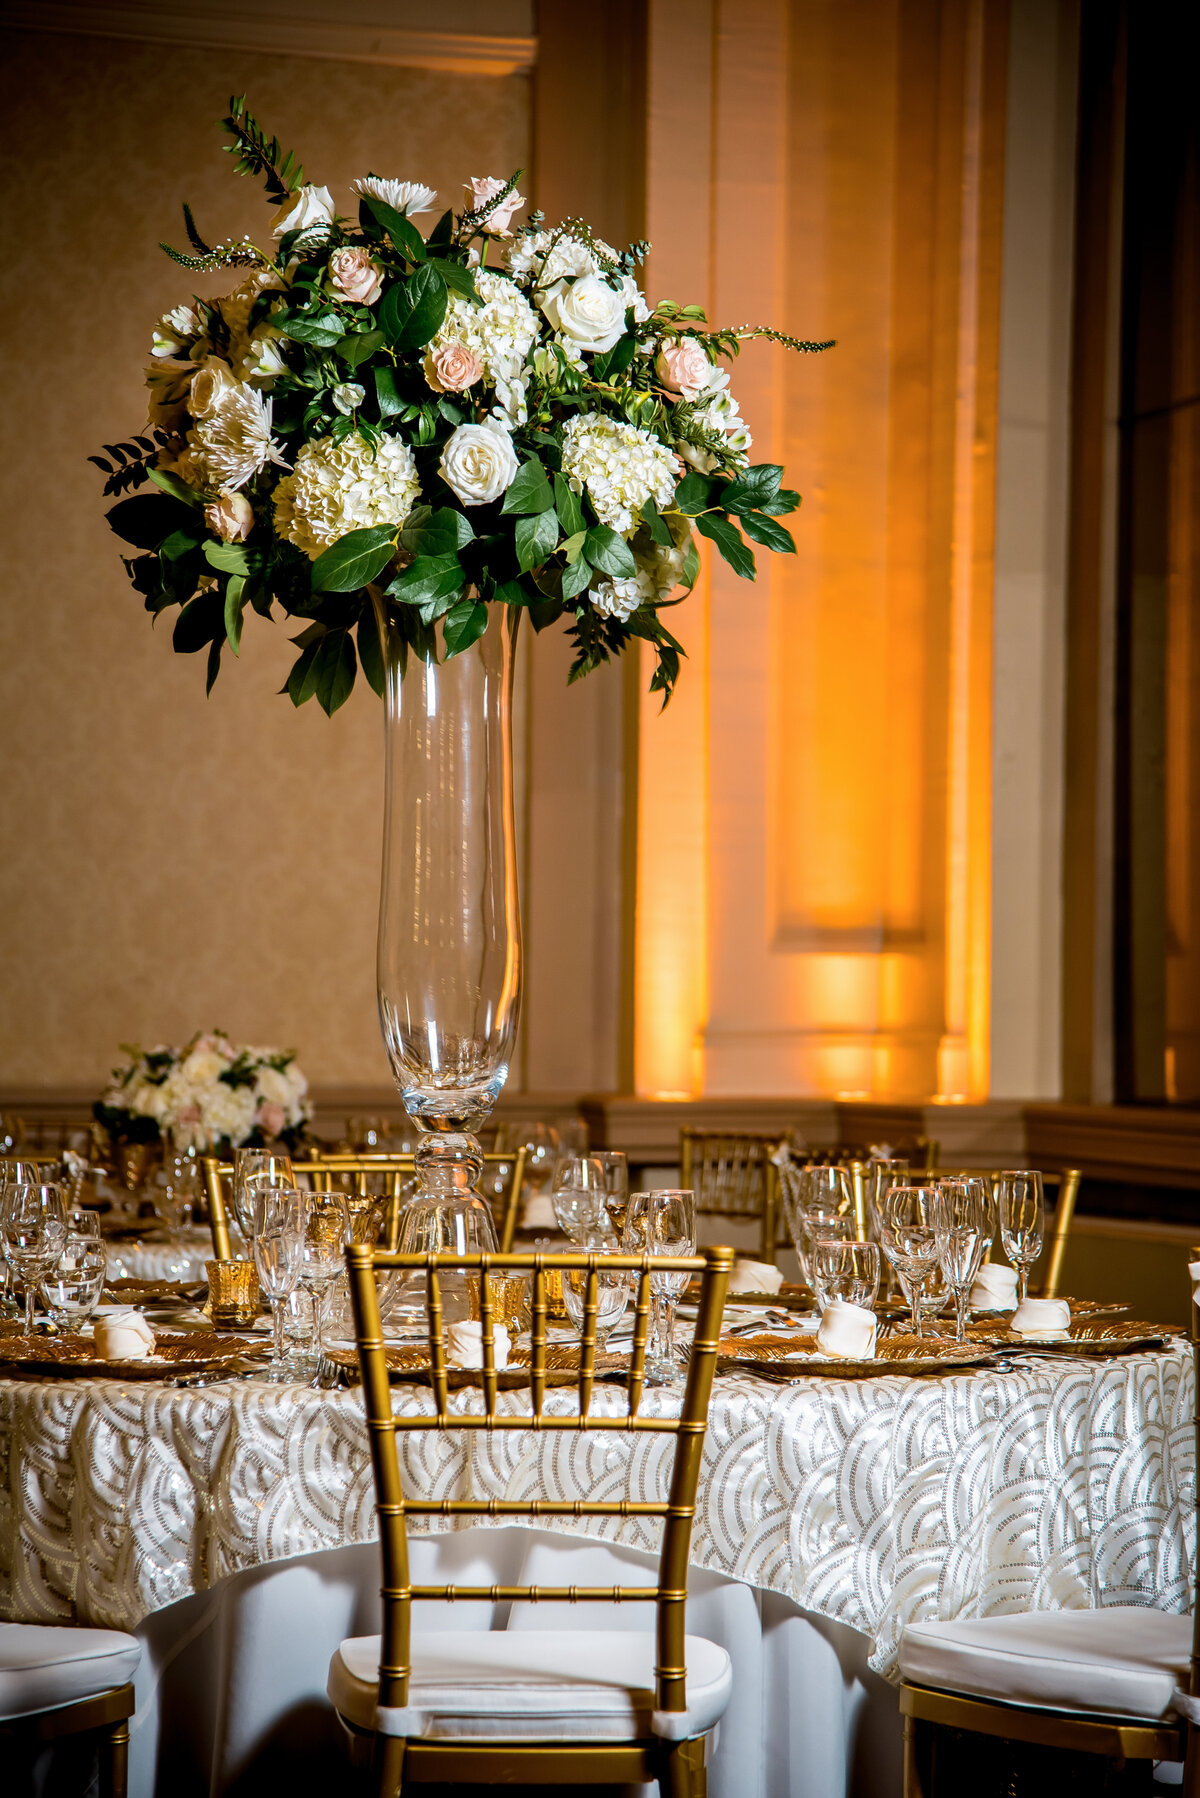 hotel bethlehem wedding florist wedding flowers white and pink florals high centerpieces